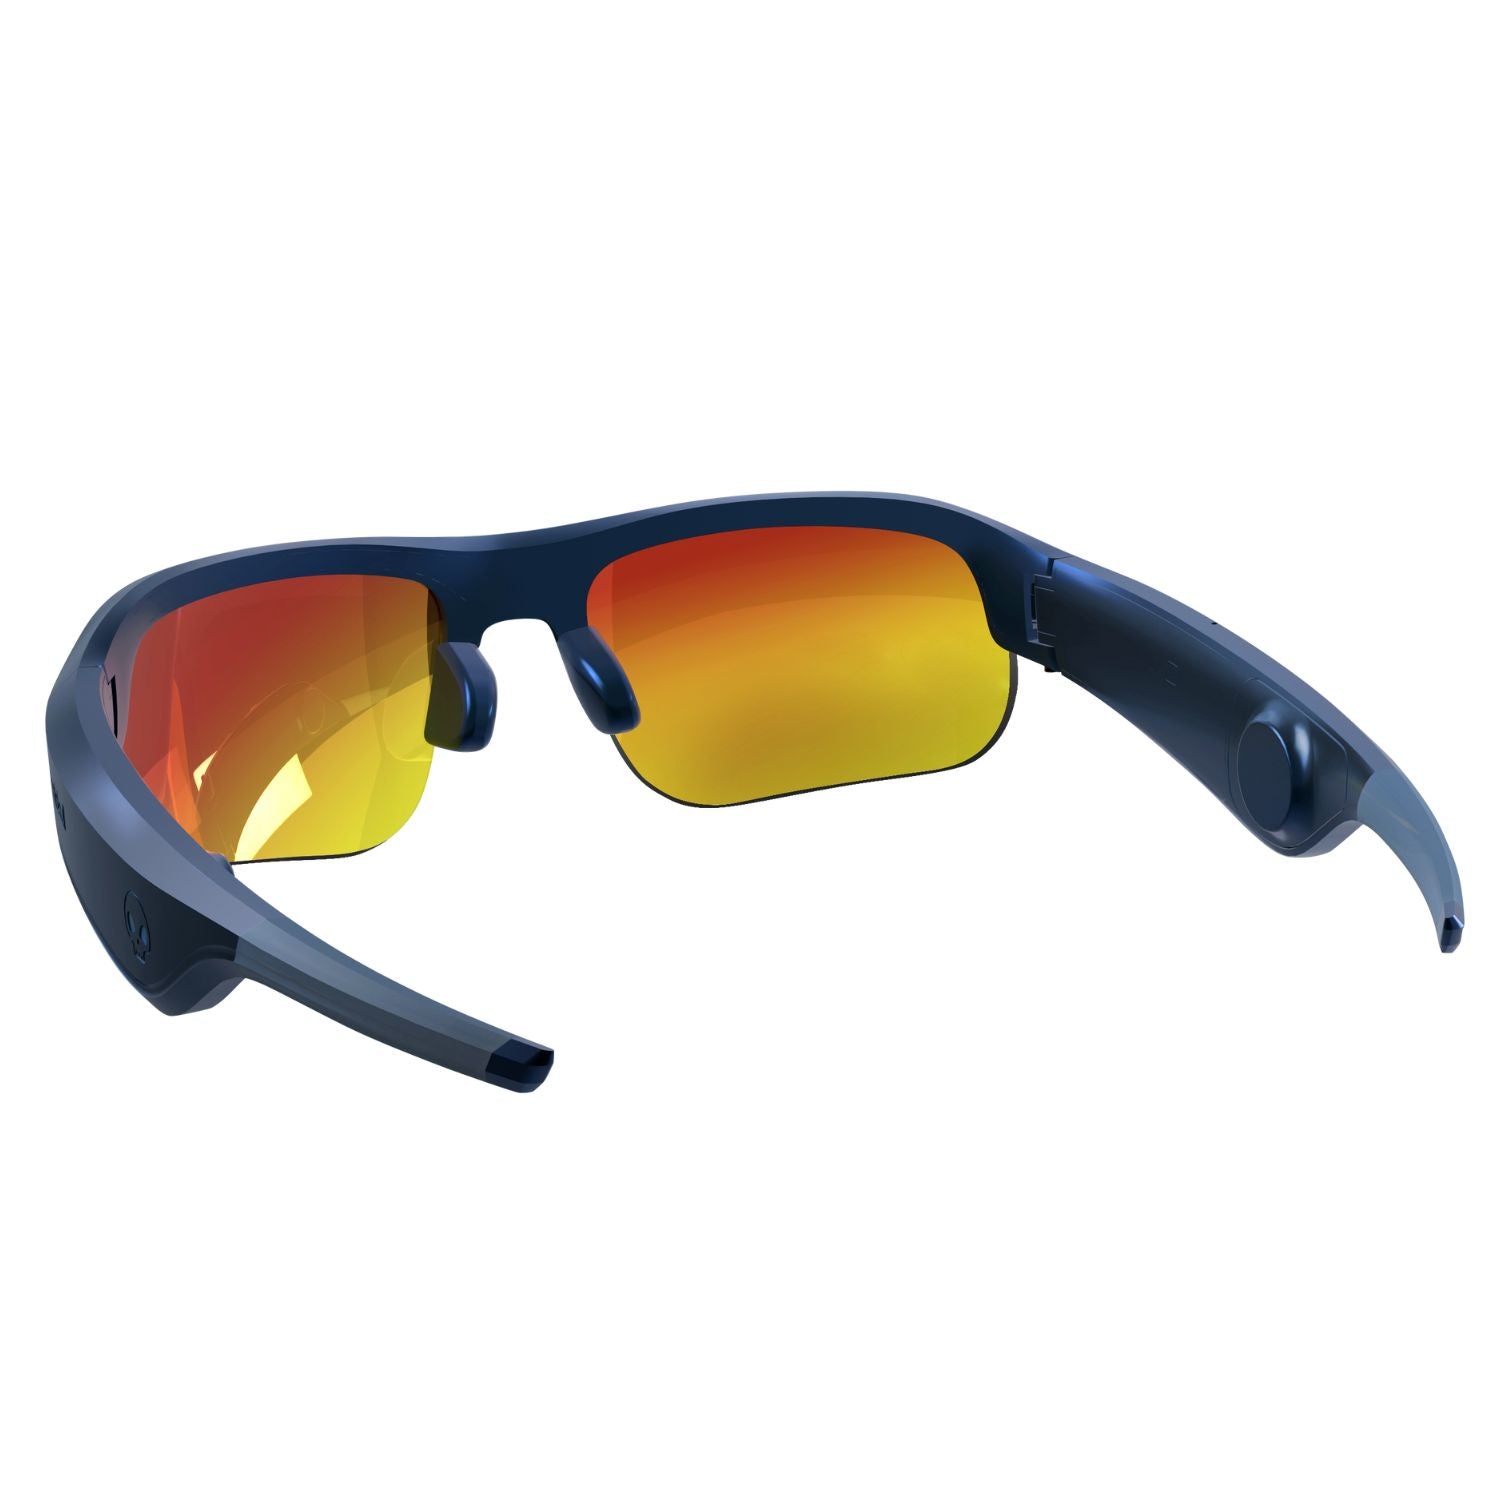  Military-Inspired Polarized Sport Sunglasses